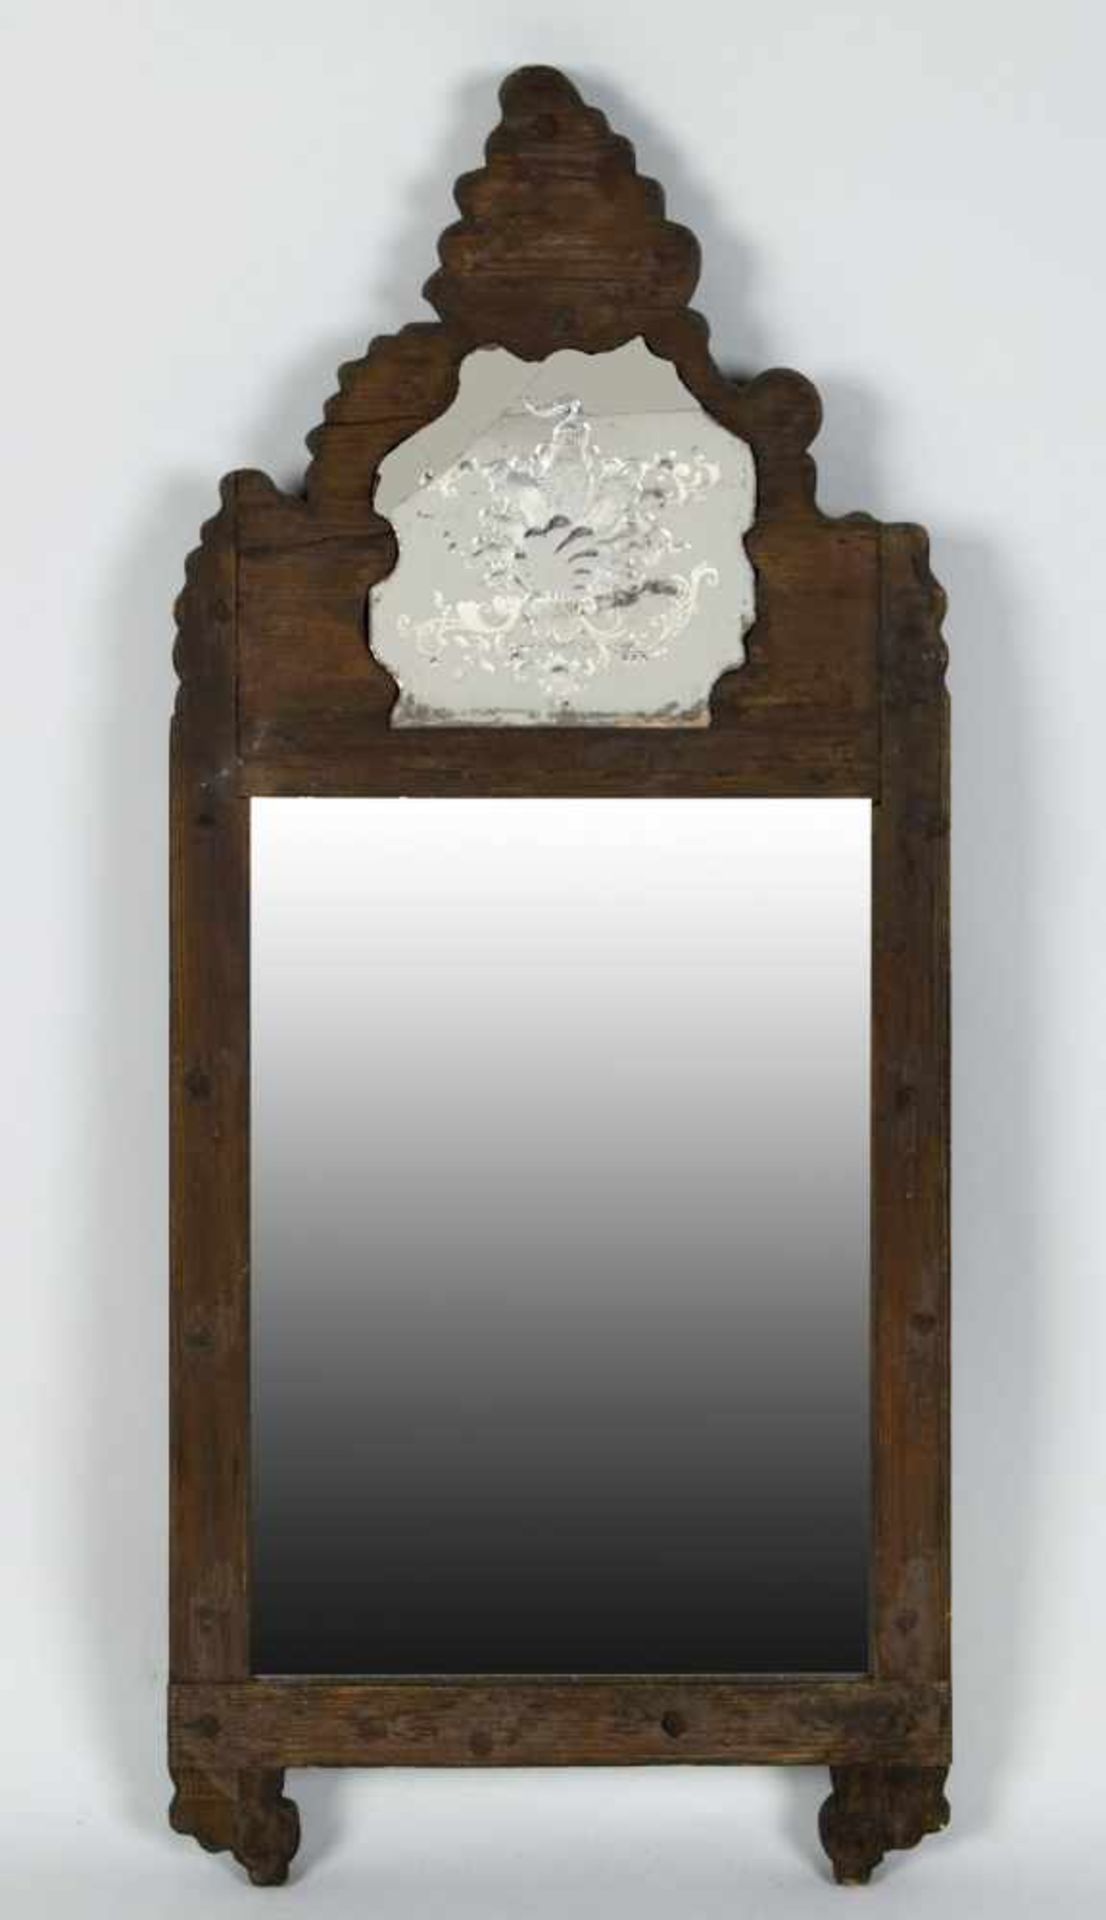 WandspiegelNadelholz, dunkel gebeizt. Untere Scheibe facettiert, obere mit Ätzdekor. 88 x 39 cm.